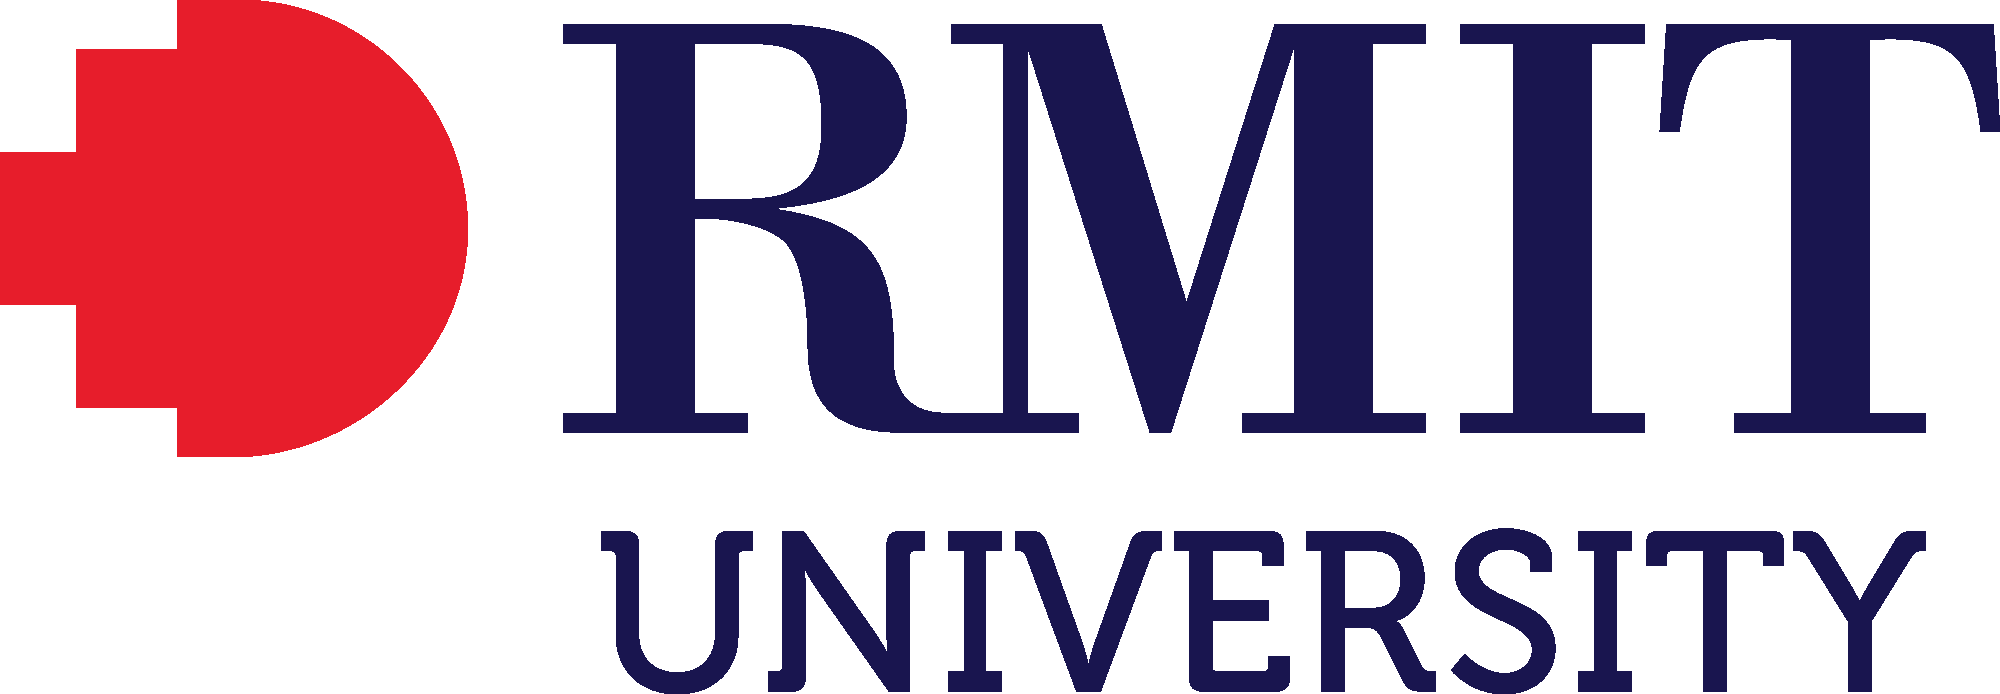 RMIT University (Royal Melbourne Institute of Technology University) logo